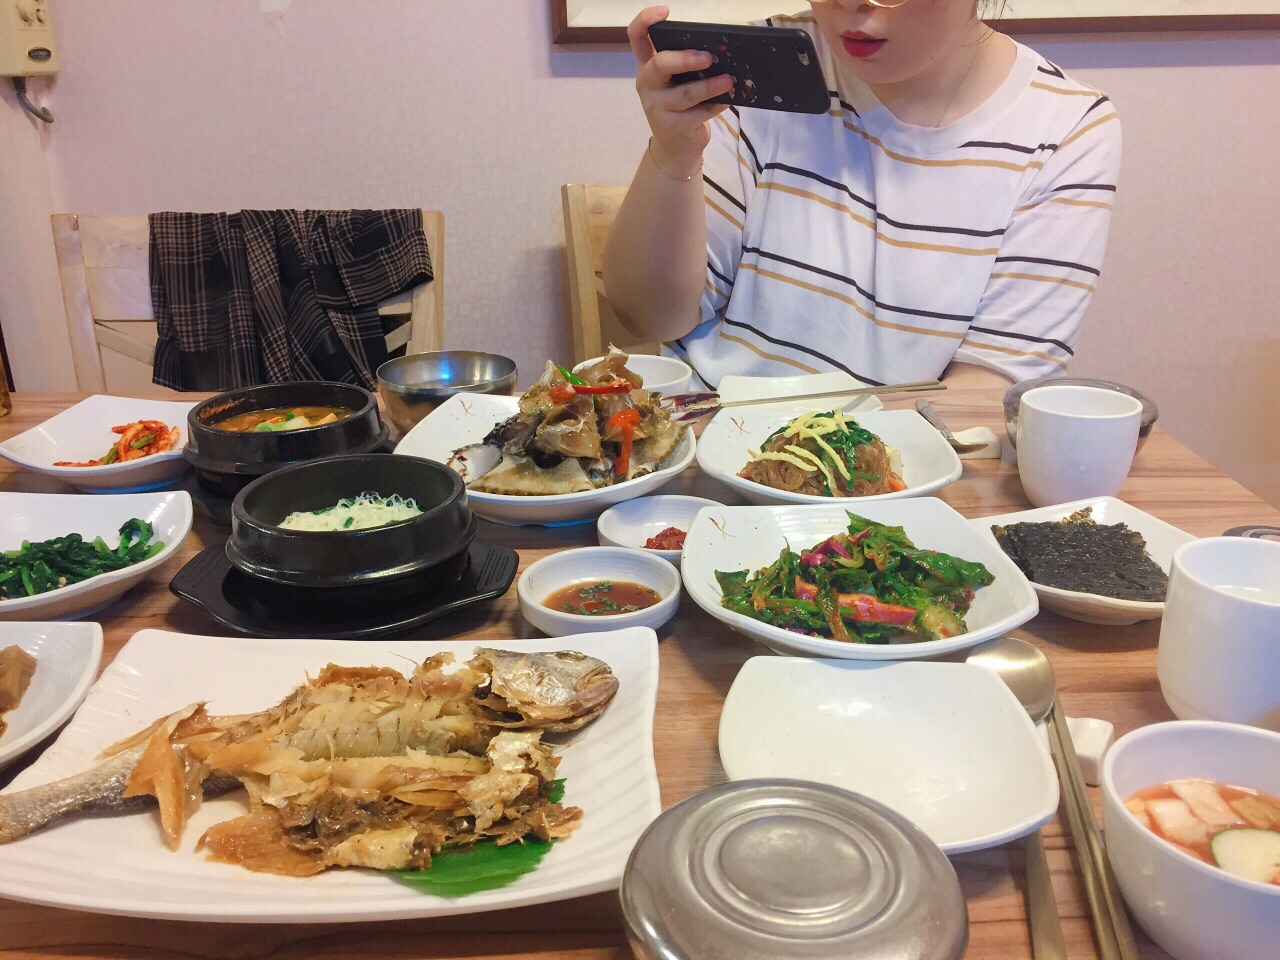 风。影。随。行: 南门韩国料理 Nam Moon Korean Food Restaurant-->吃韩国餐记